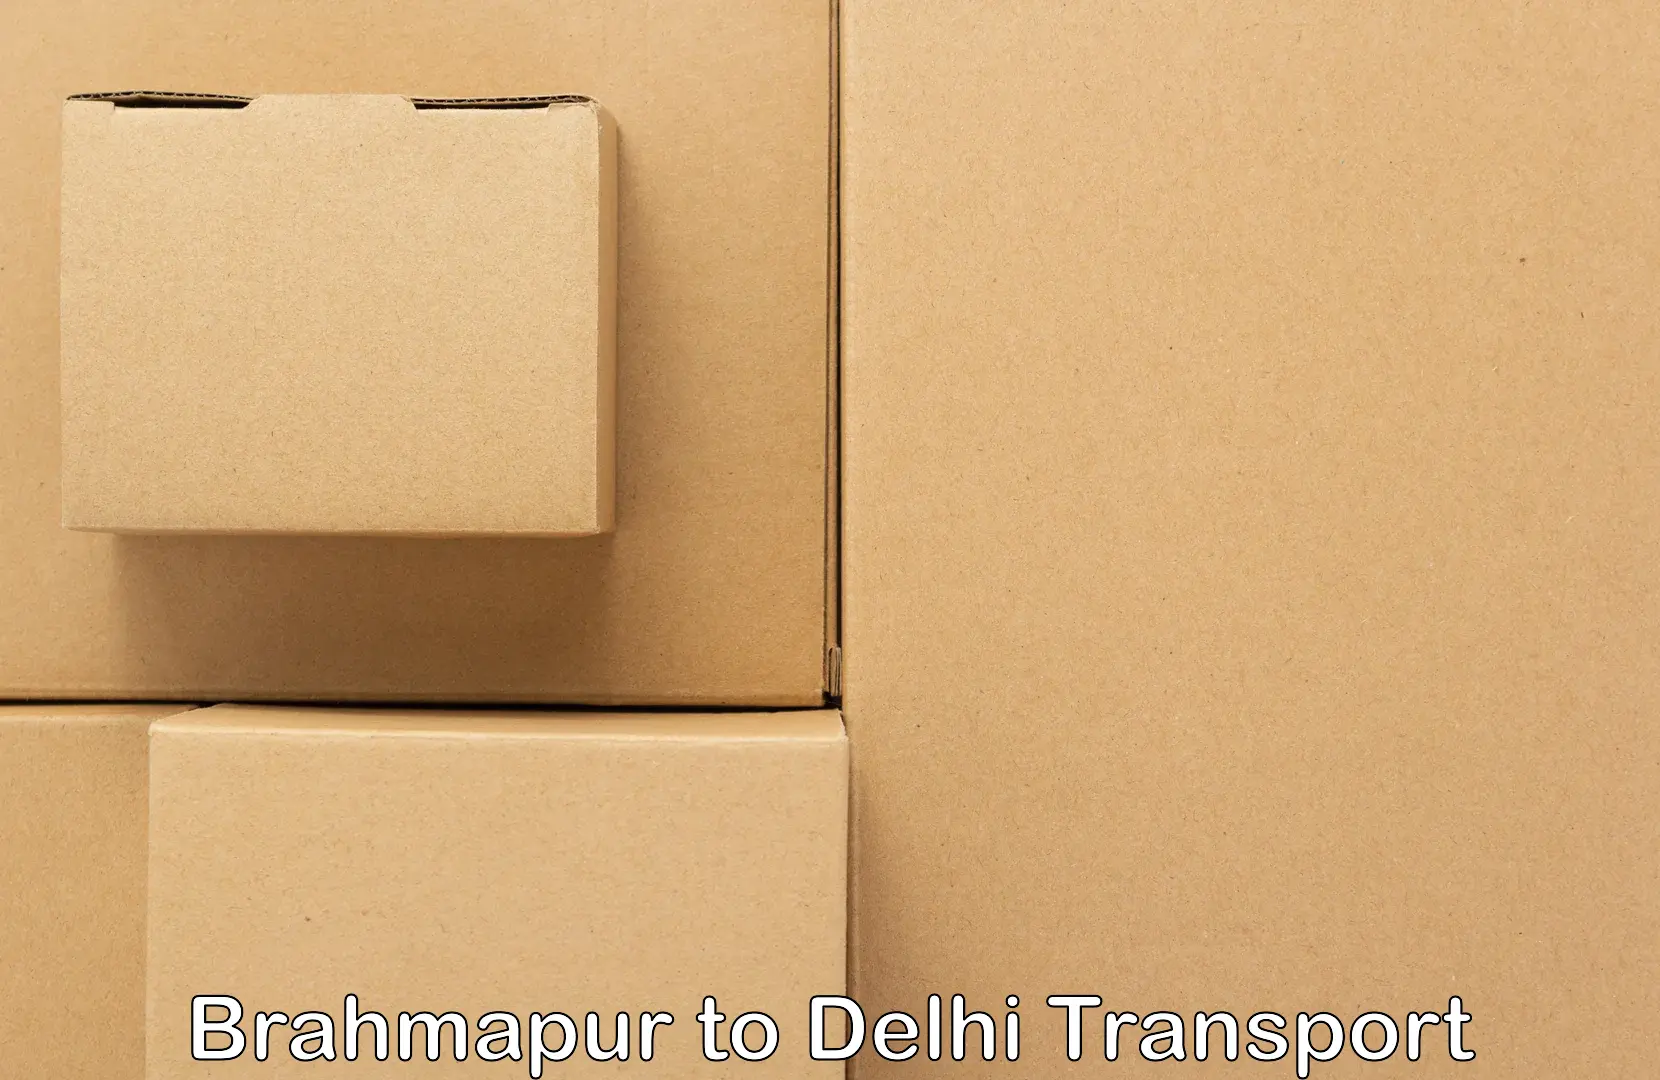 Shipping partner Brahmapur to Delhi